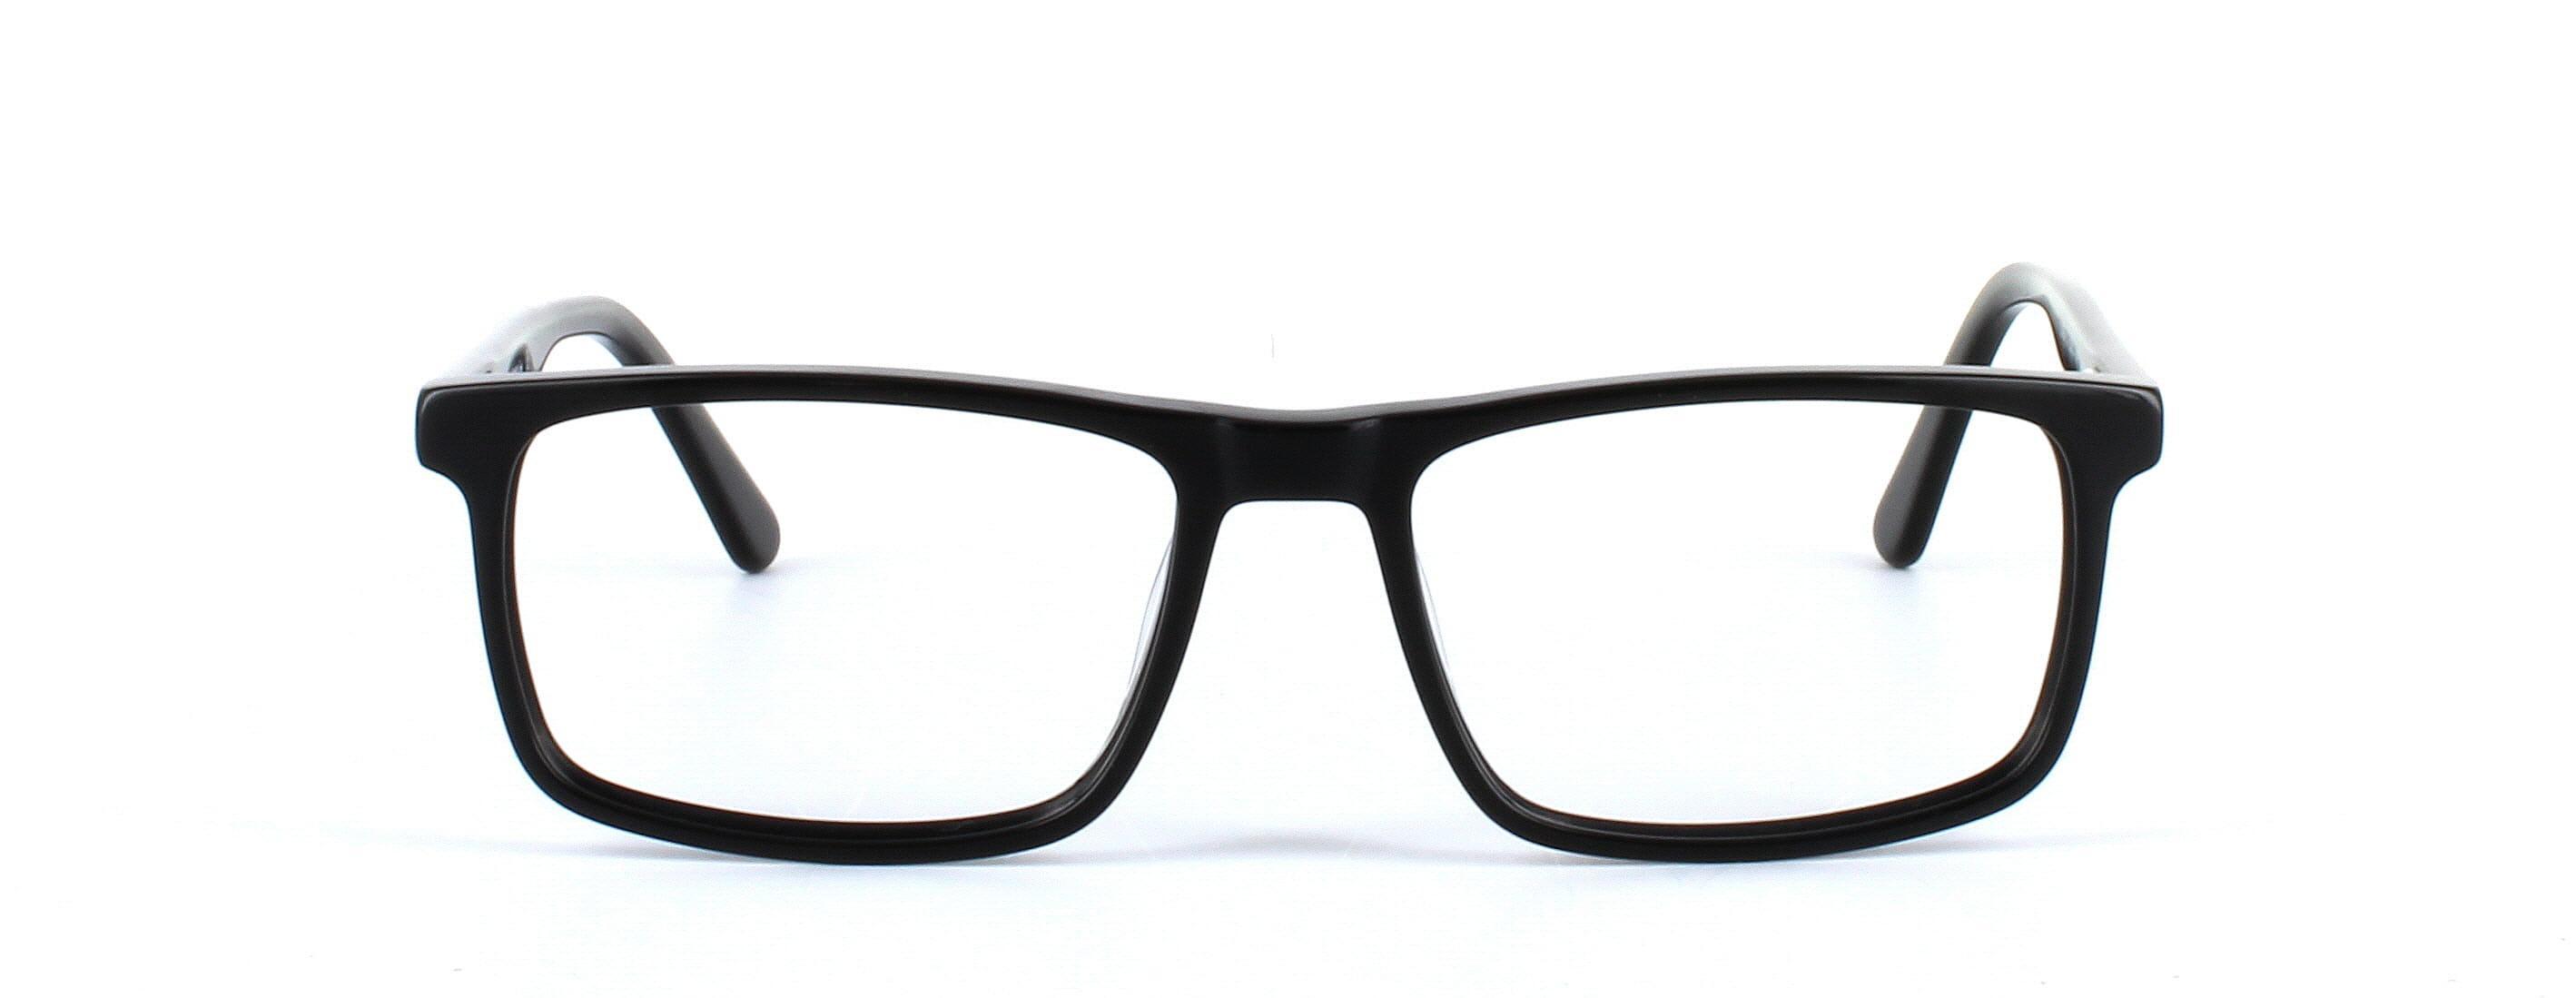 Livadia in shiny black - unisex acetate glasses - image view 5